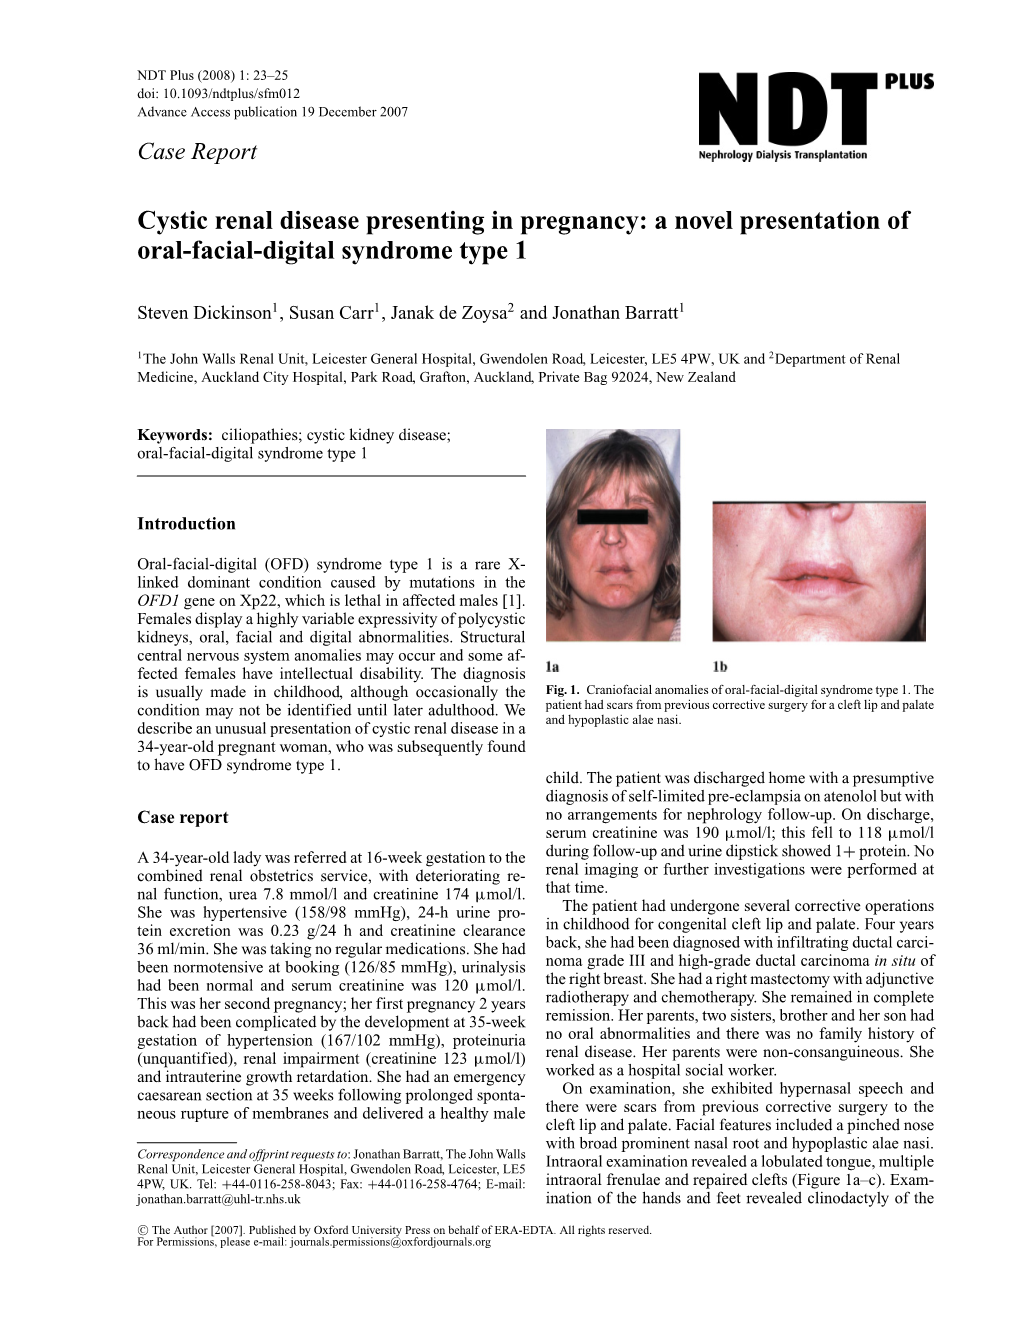 A Novel Presentation of Oral-Facial-Digital Syndrome Type 1